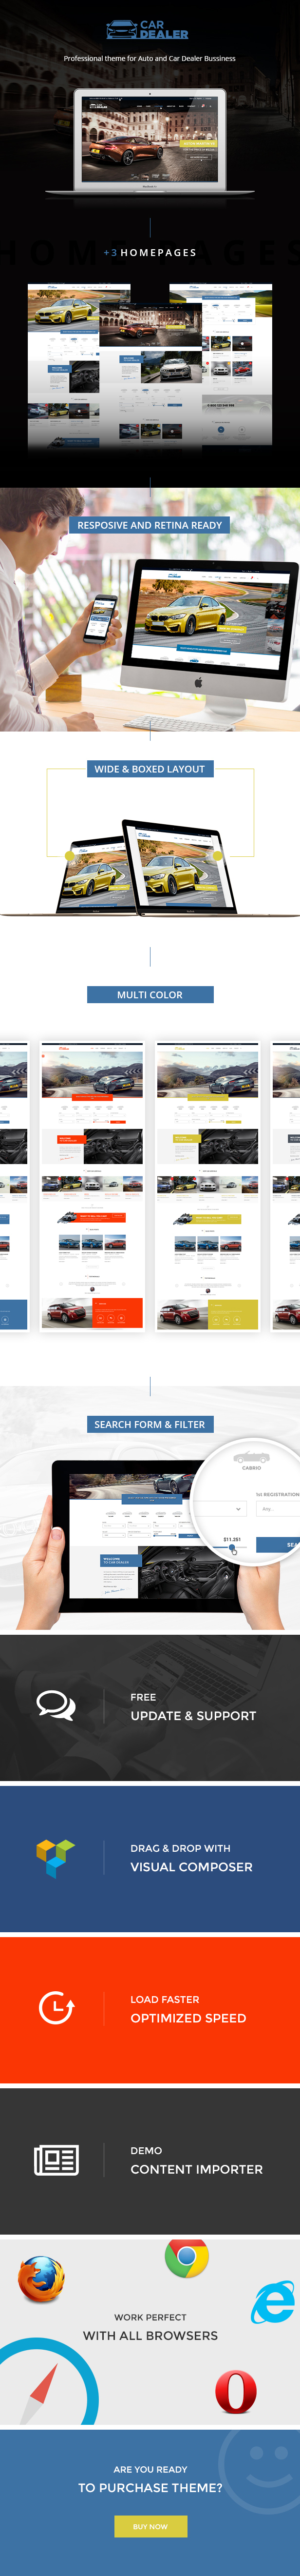 Car Dealer WordPress Theme